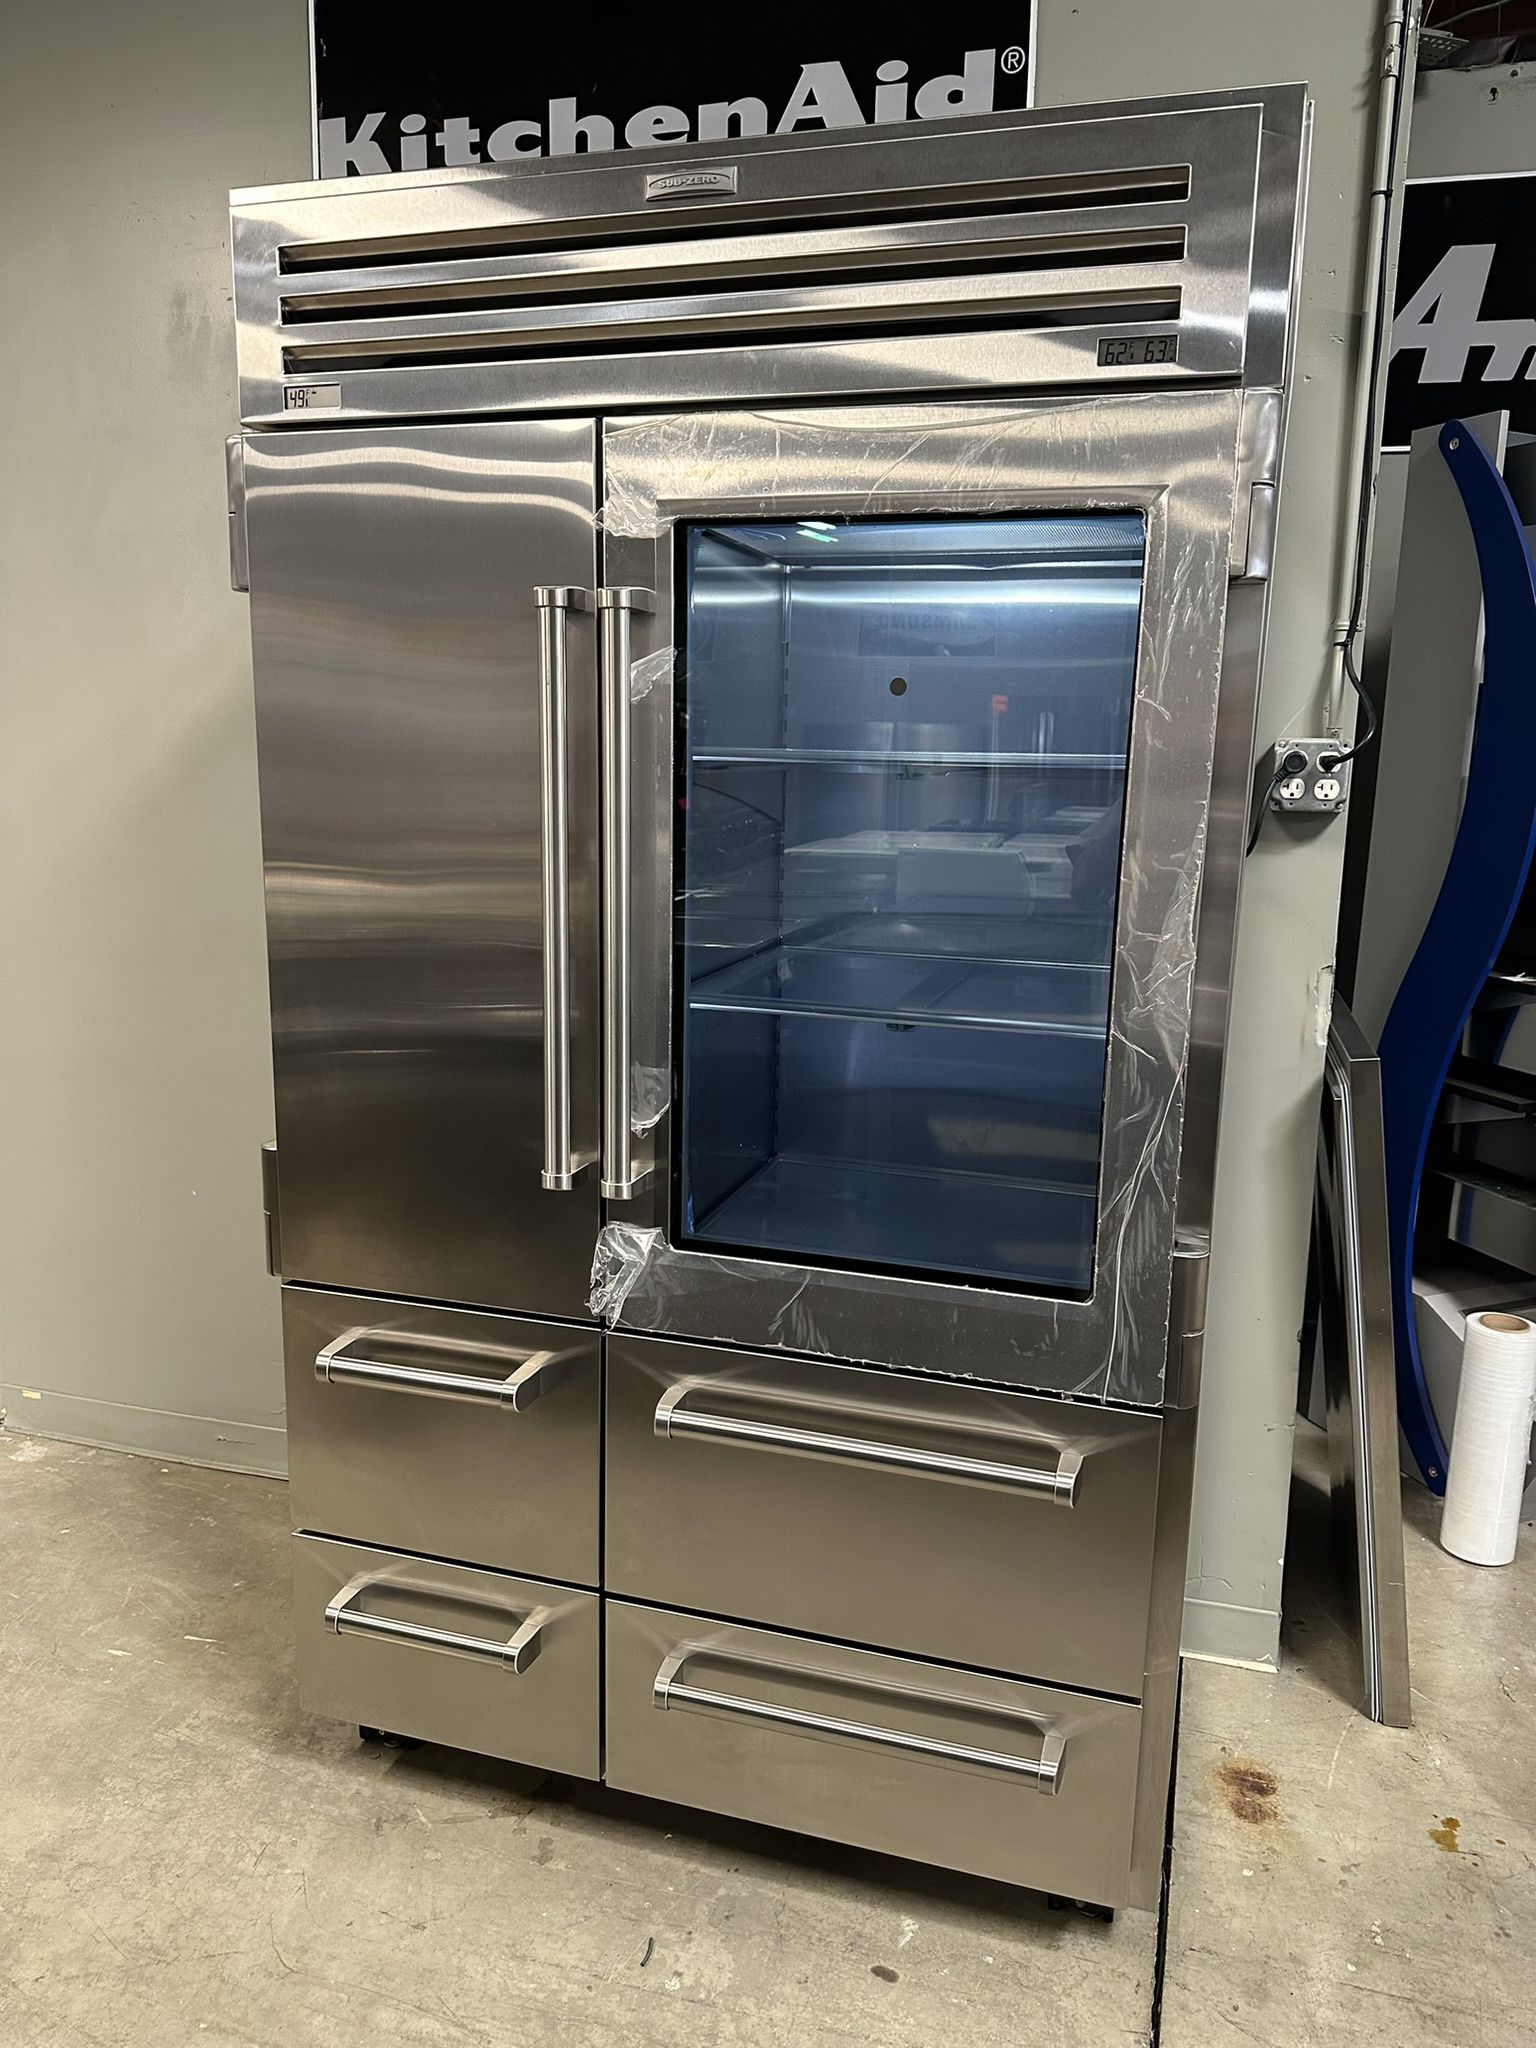 ‼️‼️ Subzero 48” Built In Refrigerator Stainless Steel ‼️‼️